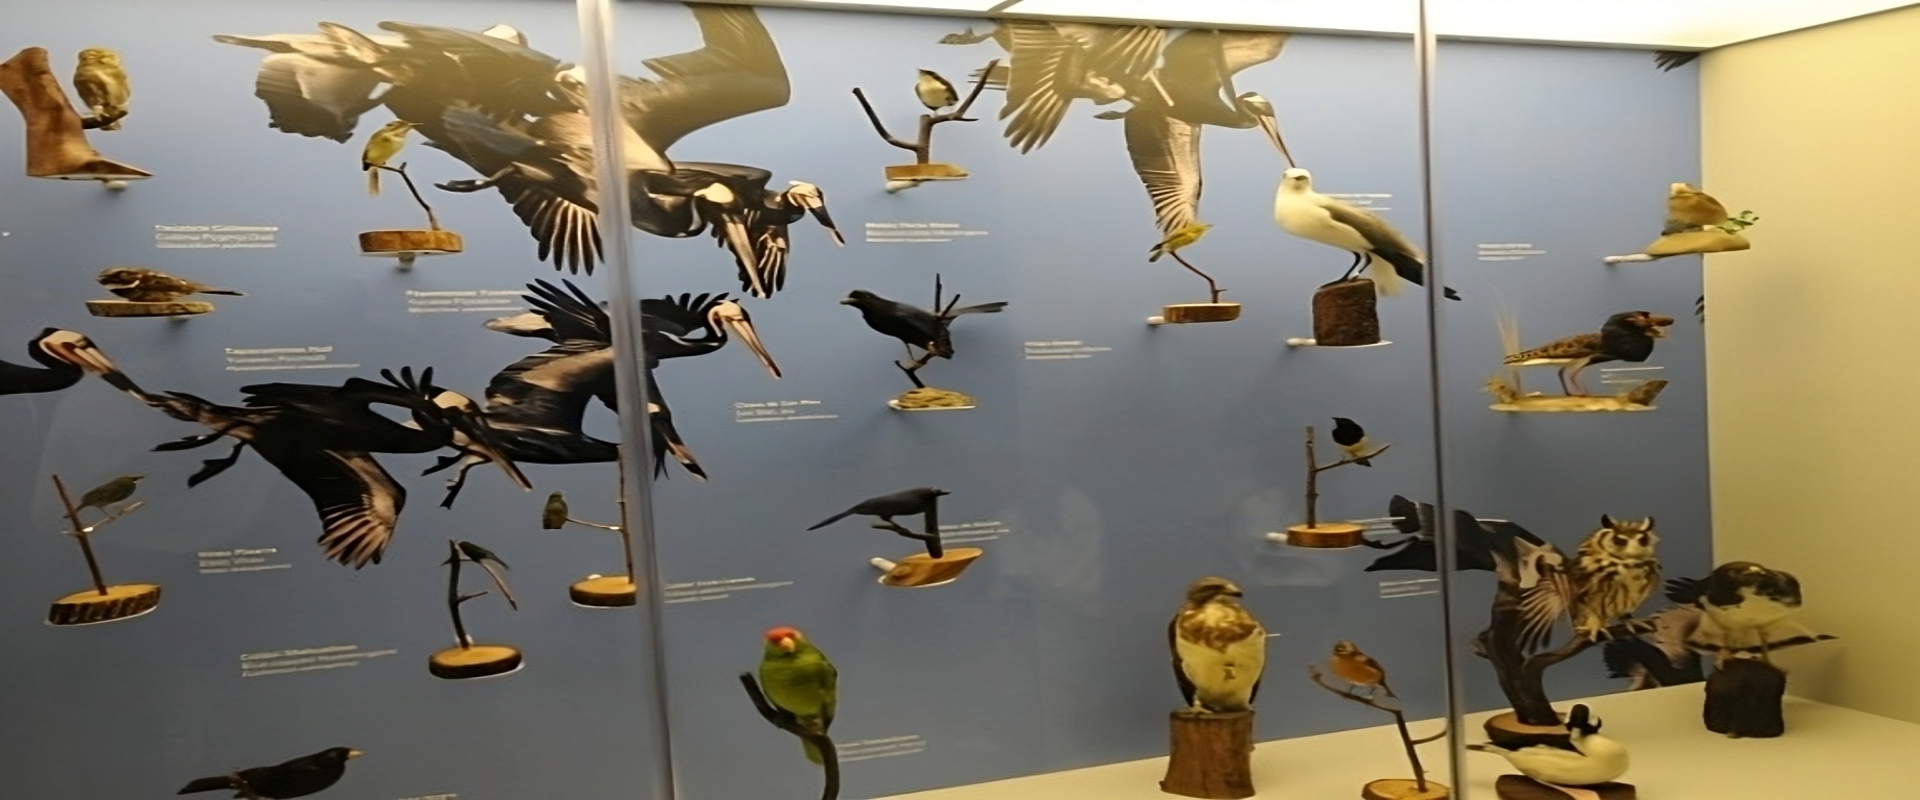 museo de aves